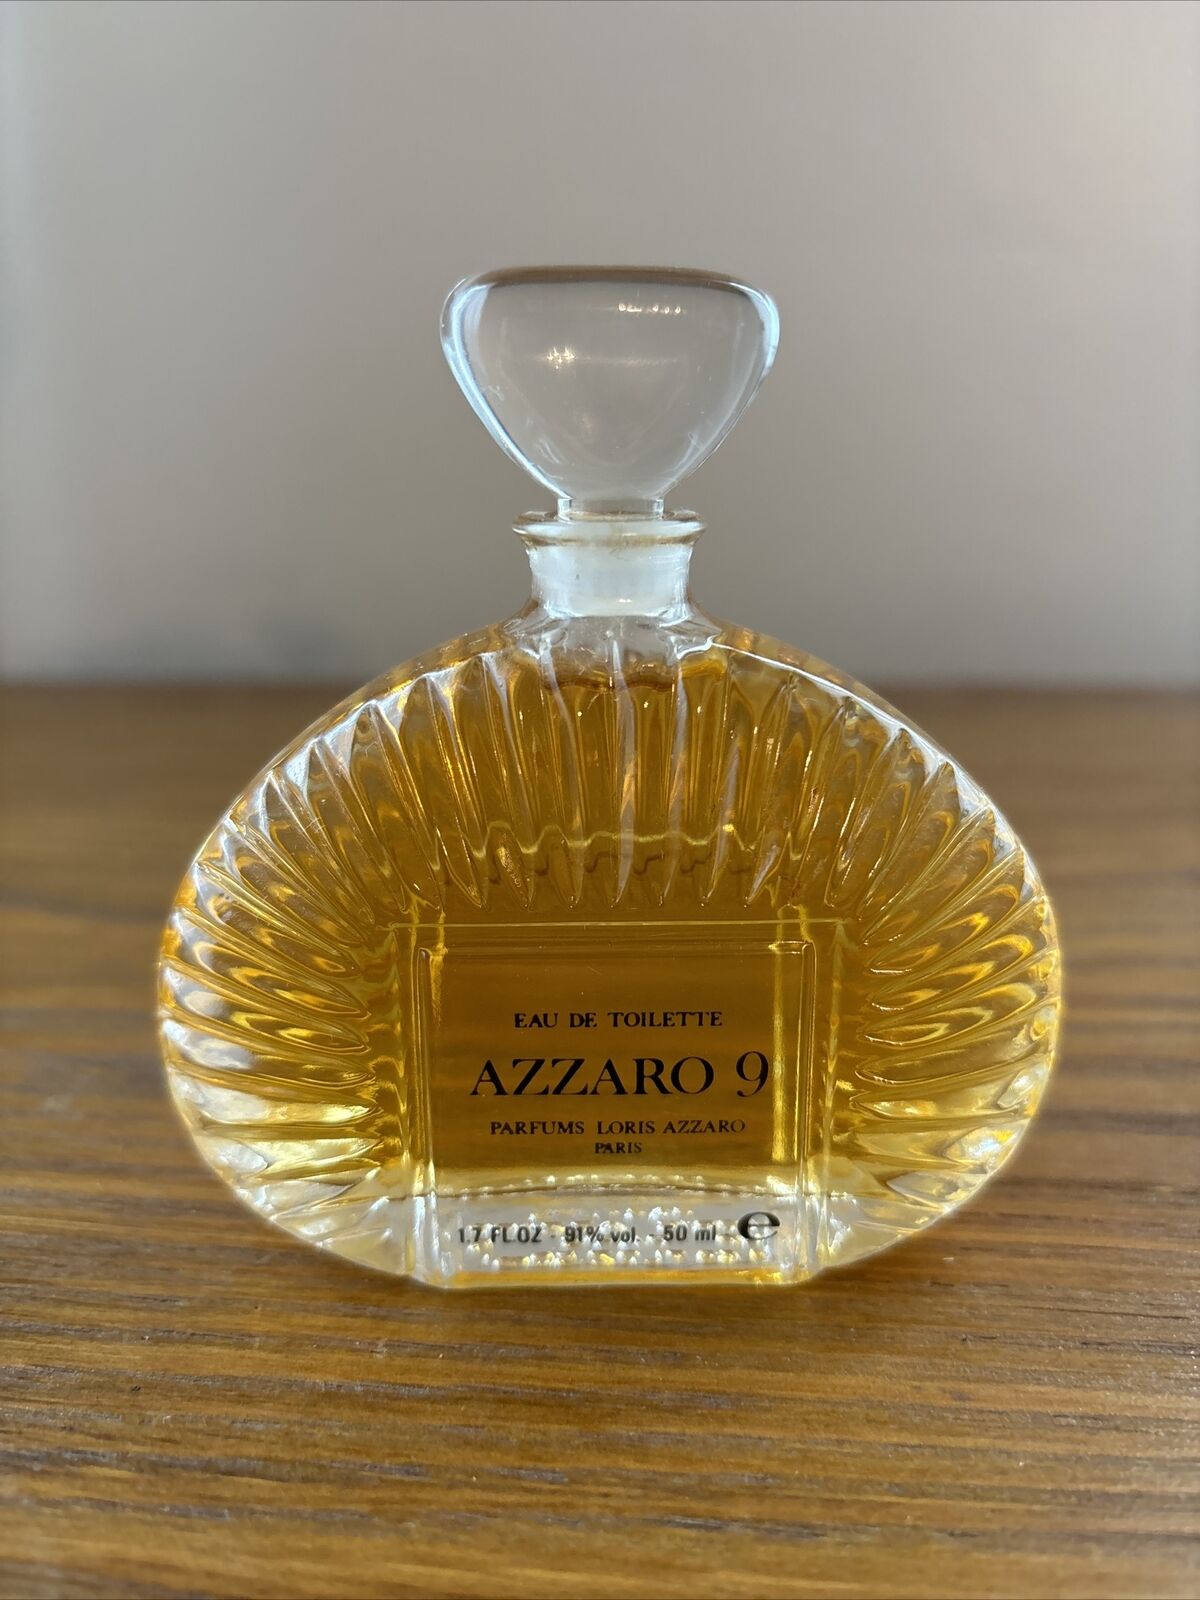 Vintage Azzaro 9 Eau De Toilette 1.7 Oz. Splash Perfume No Box *READ DETIALS*